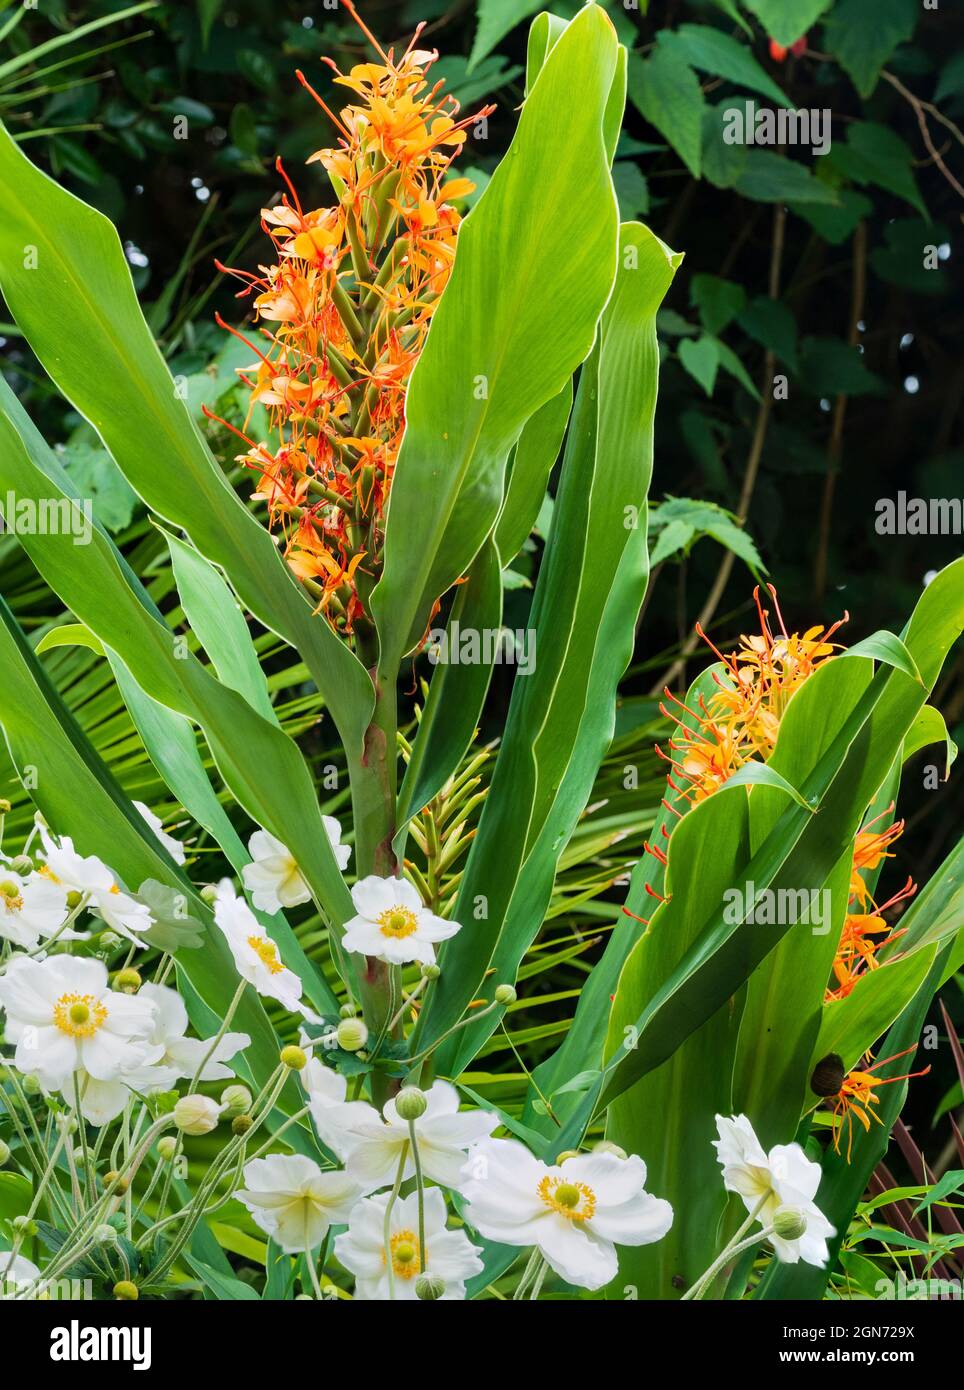 Late summer combination planting of Anemone x hybrida 'Honorine Jobert' and ginger lily Hedychium 'Tara' Stock Photo